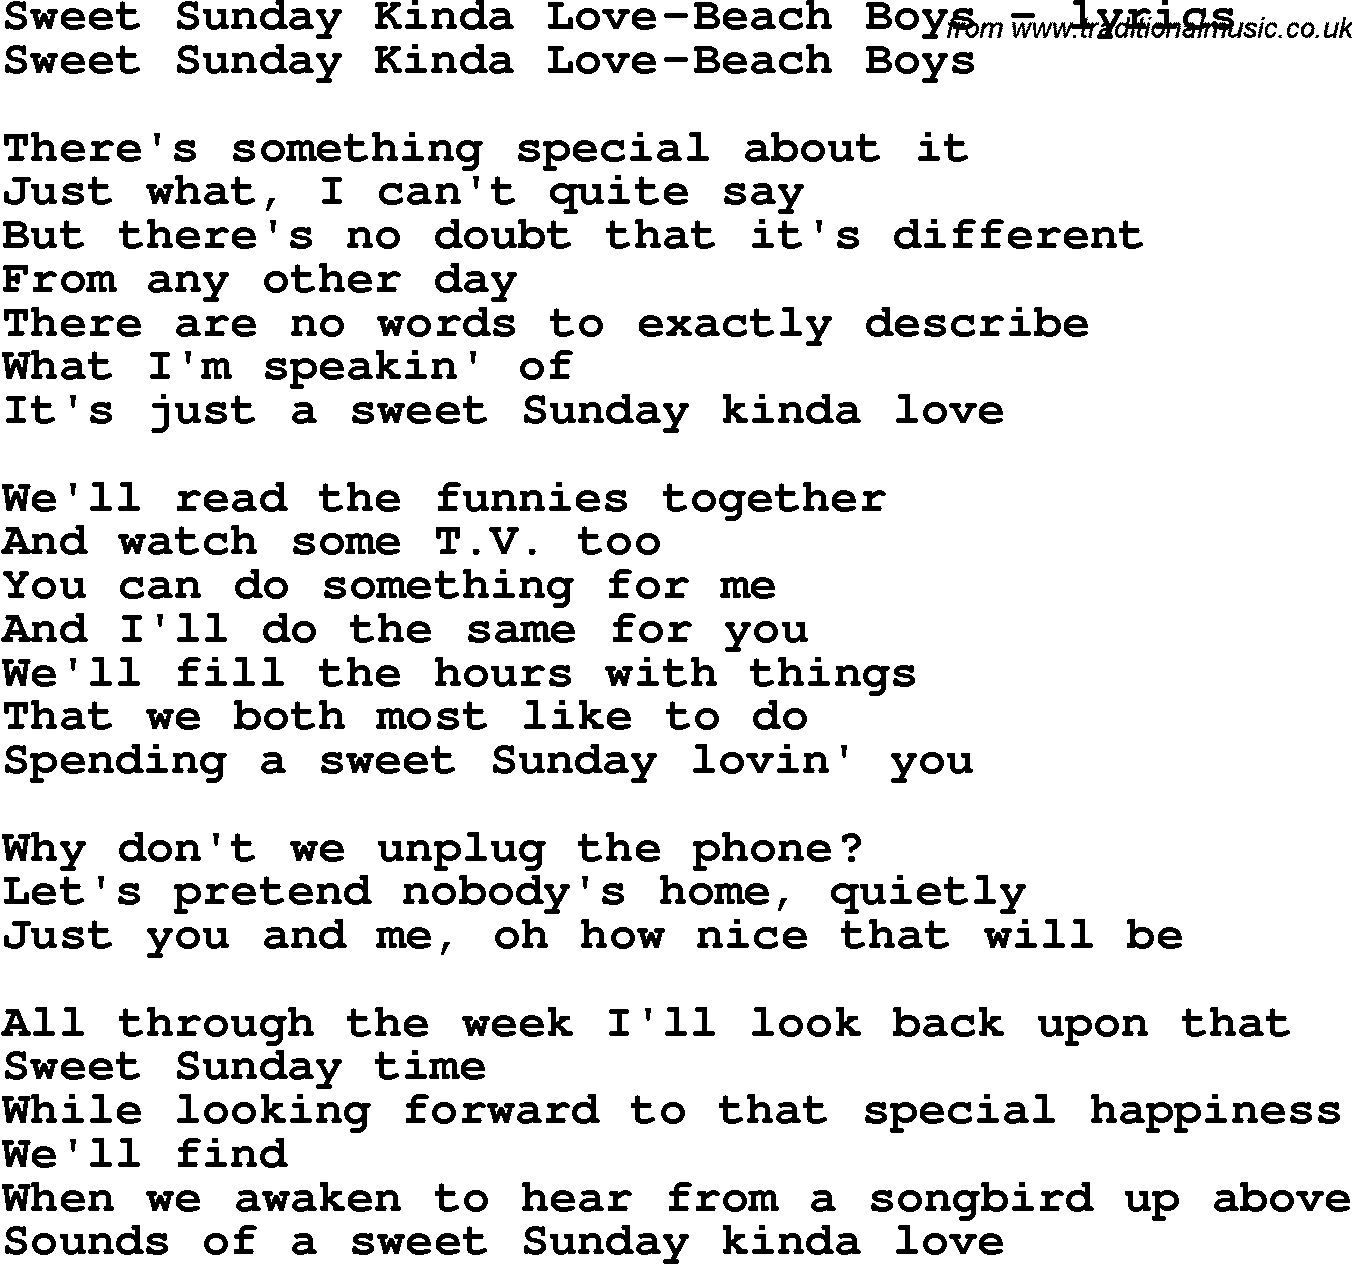 Love Song Lyrics for: Sweet Sunday Kinda Love-Beach Boys